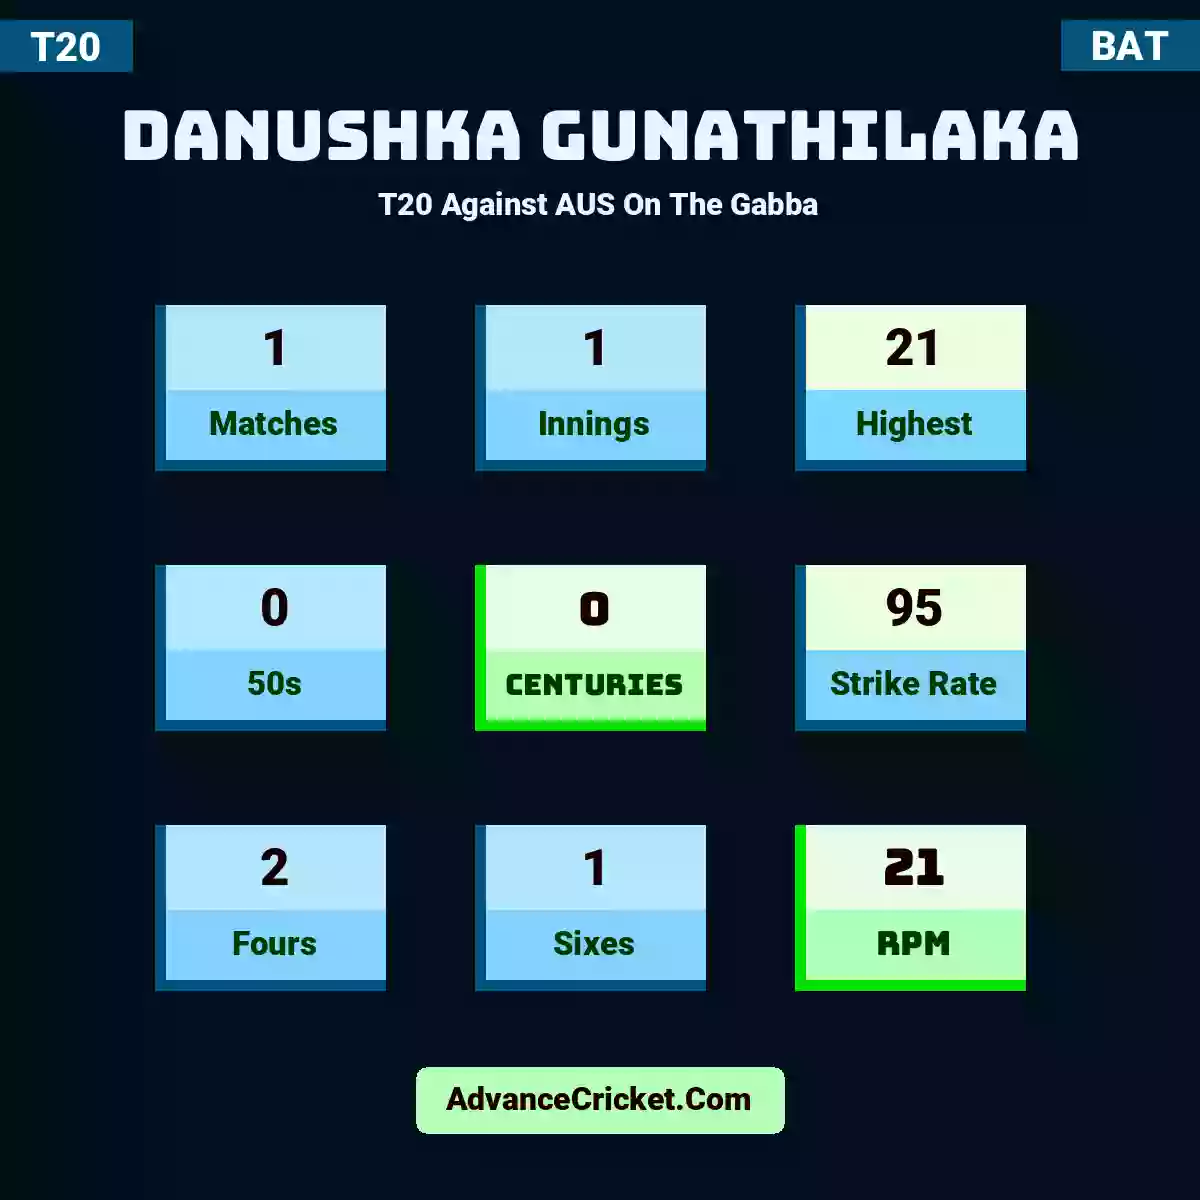 Danushka Gunathilaka T20  Against AUS On The Gabba, Danushka Gunathilaka played 1 matches, scored 21 runs as highest, 0 half-centuries, and 0 centuries, with a strike rate of 95. D.Gunathilaka hit 2 fours and 1 sixes, with an RPM of 21.